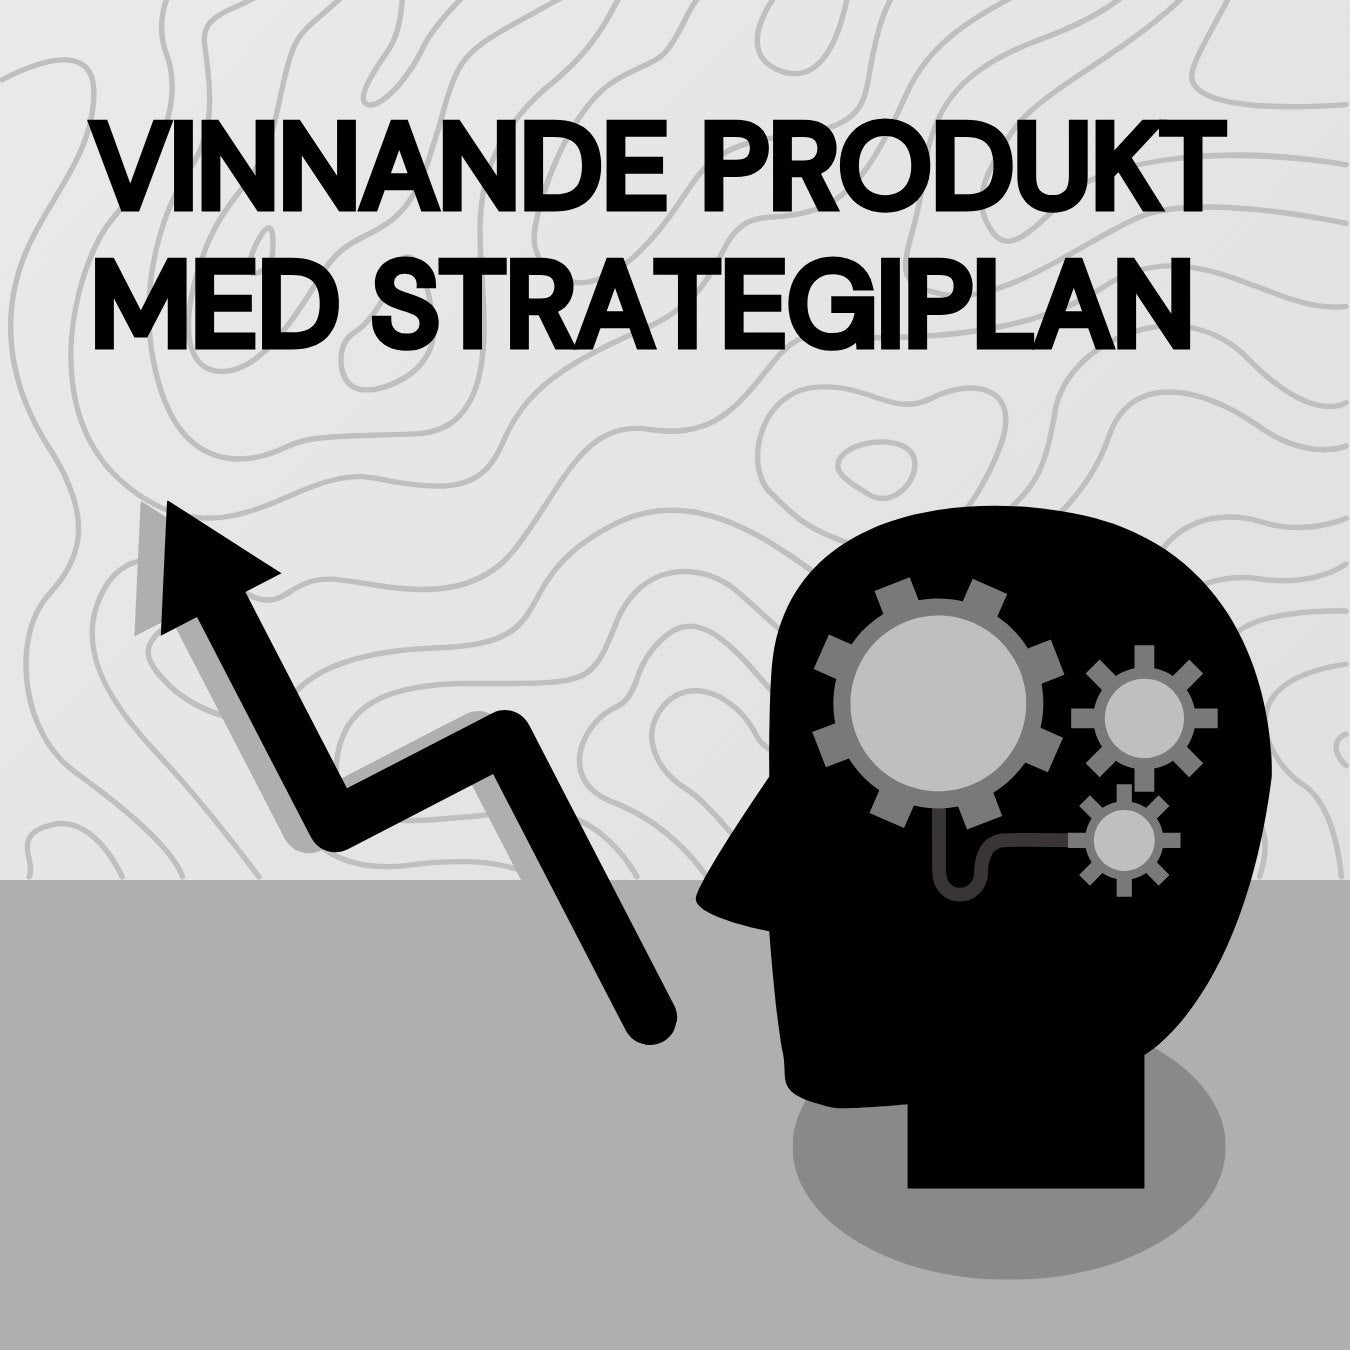 Vinnande produkt m. strategiplan